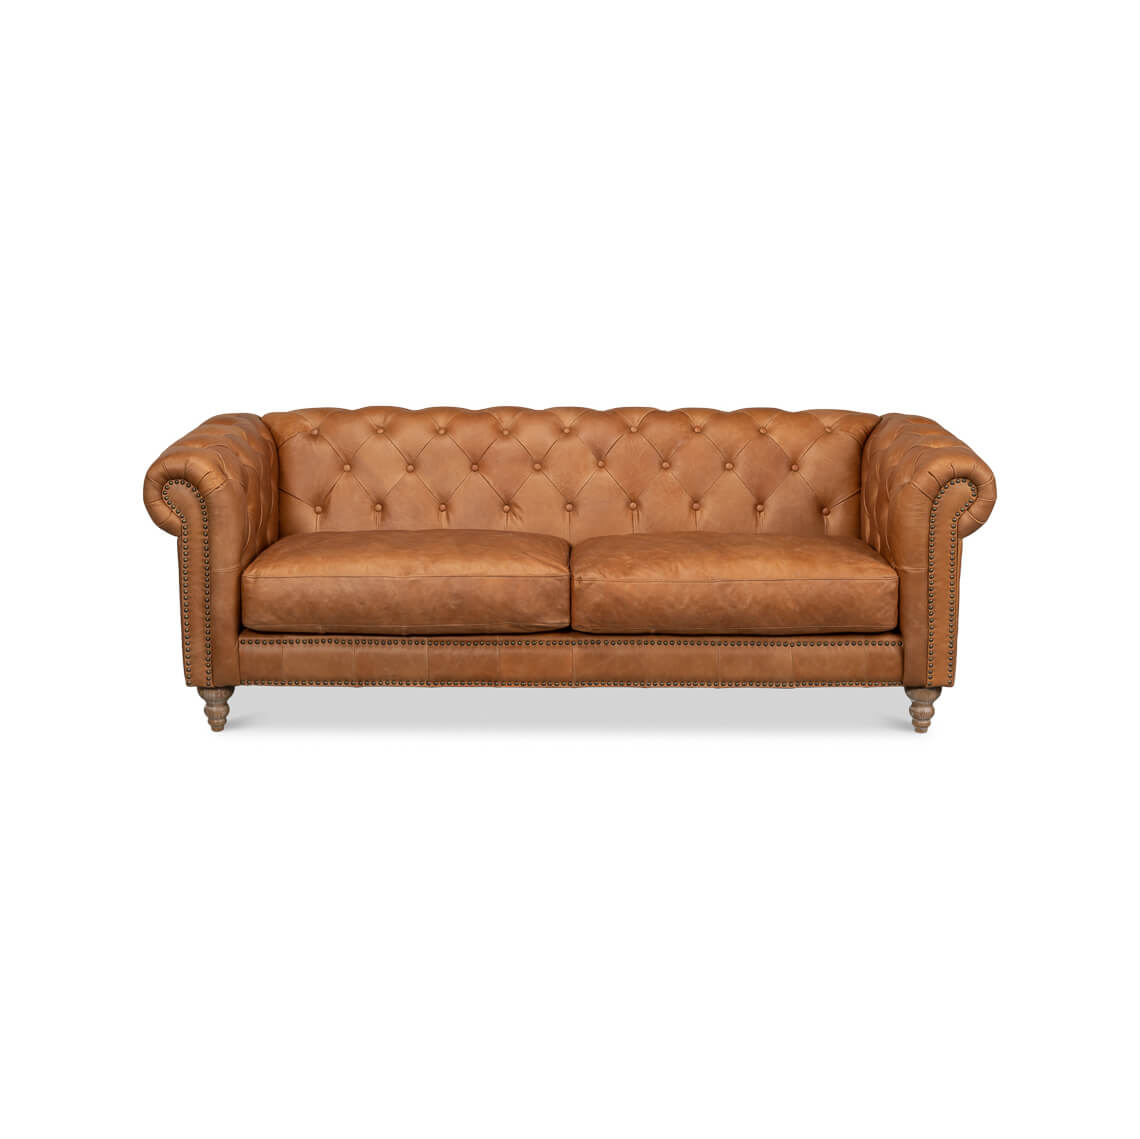 Tufted Leather Chesterfield Sofa - English Georgian America